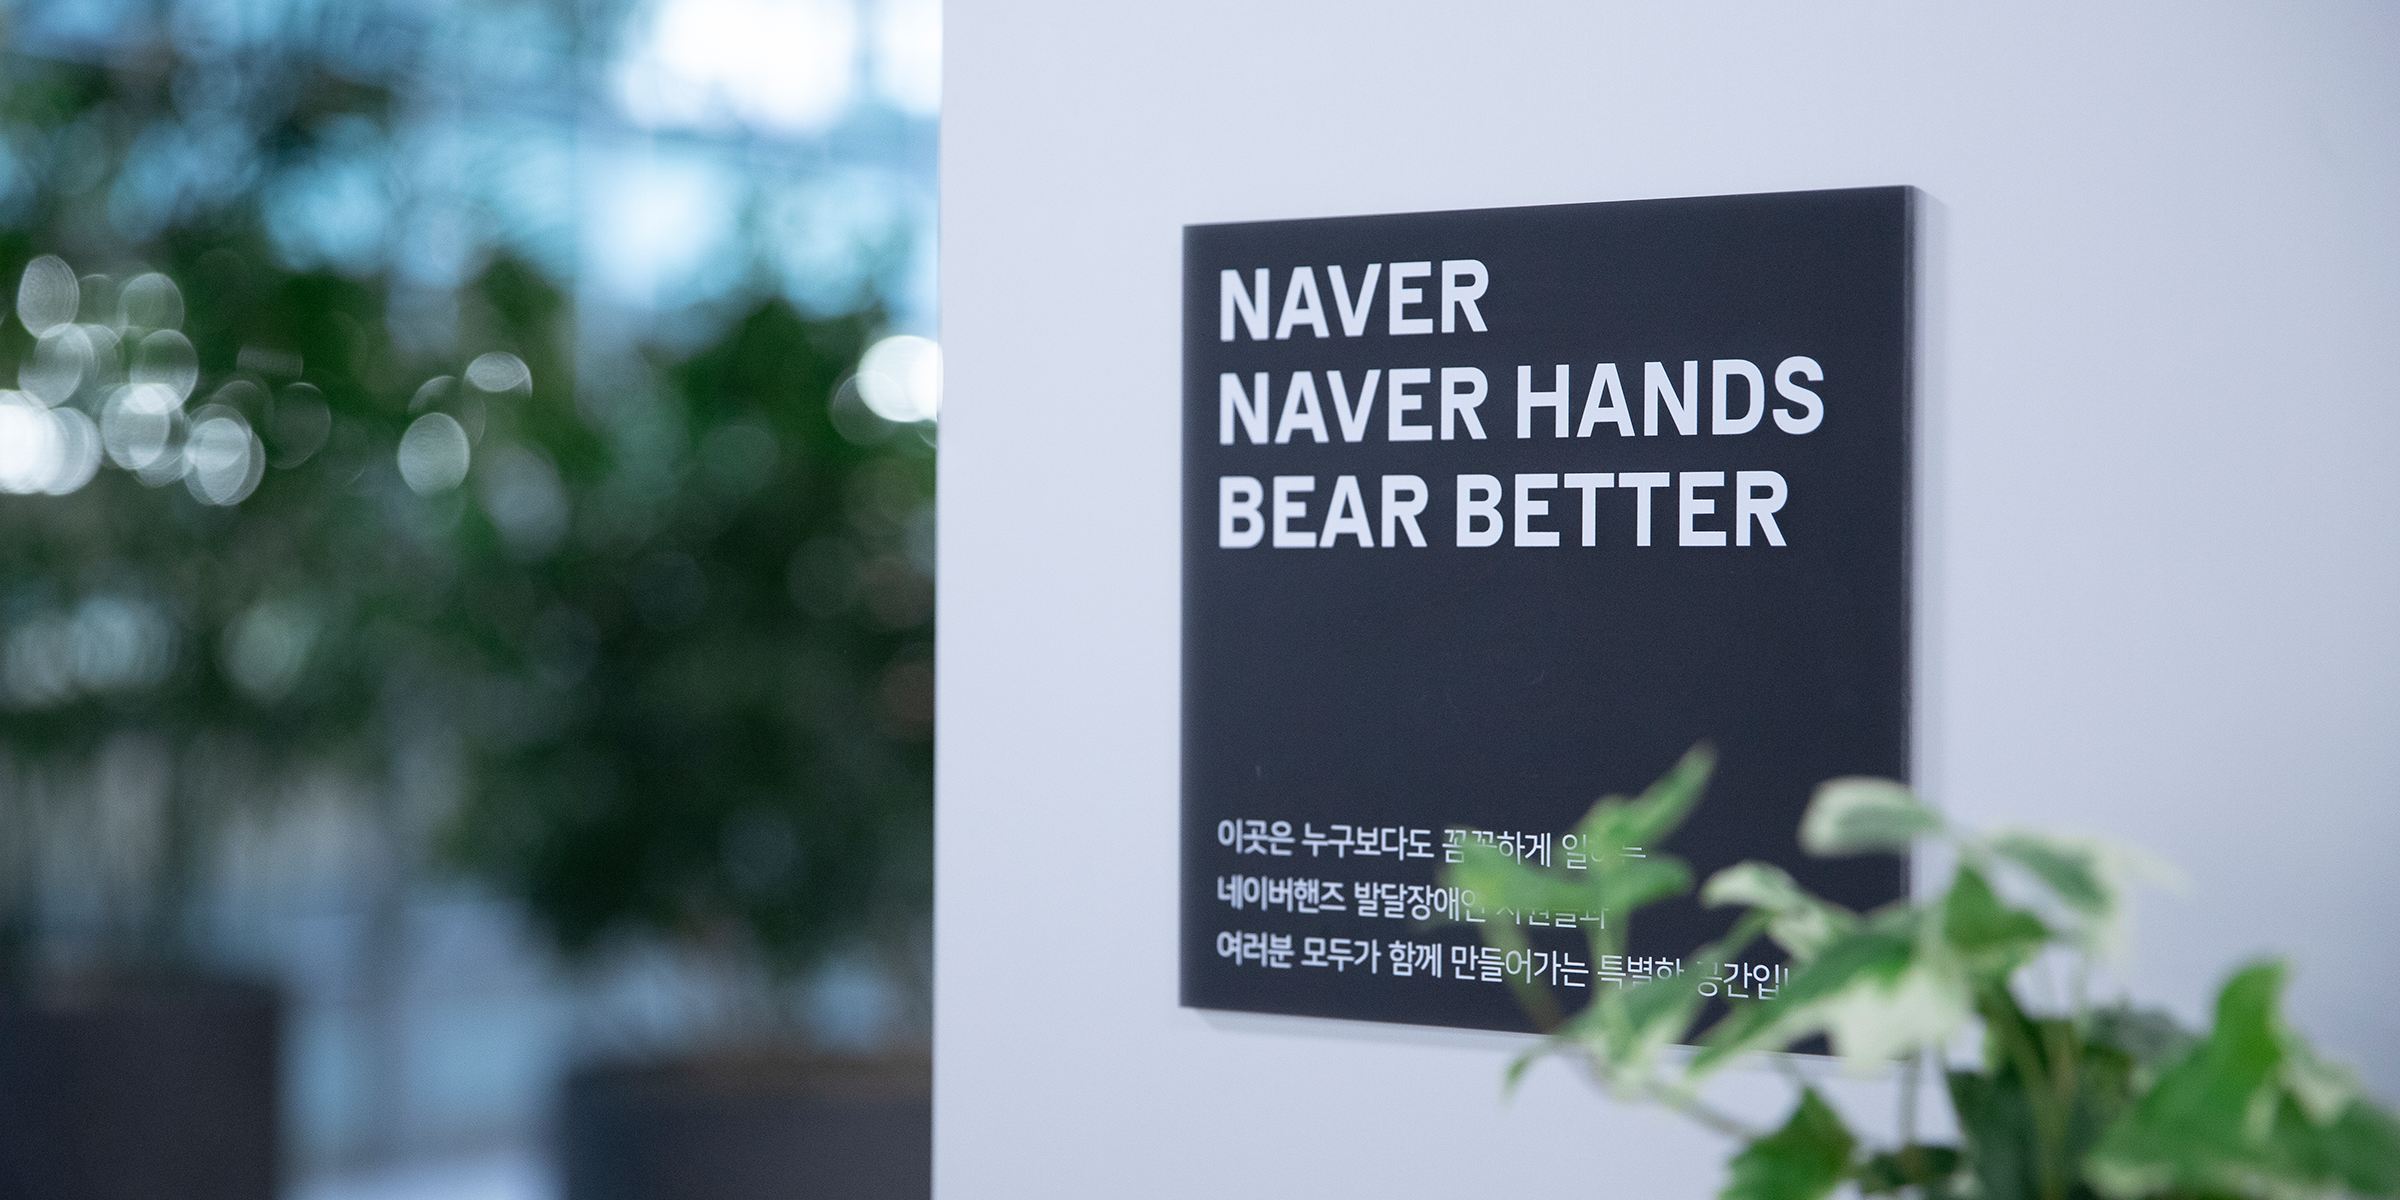 NAVER HANDS BEAR BETTER 이곳은 누구보다도 꼼꼼하게 일하는 네이버핸즈 발달장애인 자원들과 여러분 모두가 함께 만들어가는 특별한 공간입니다